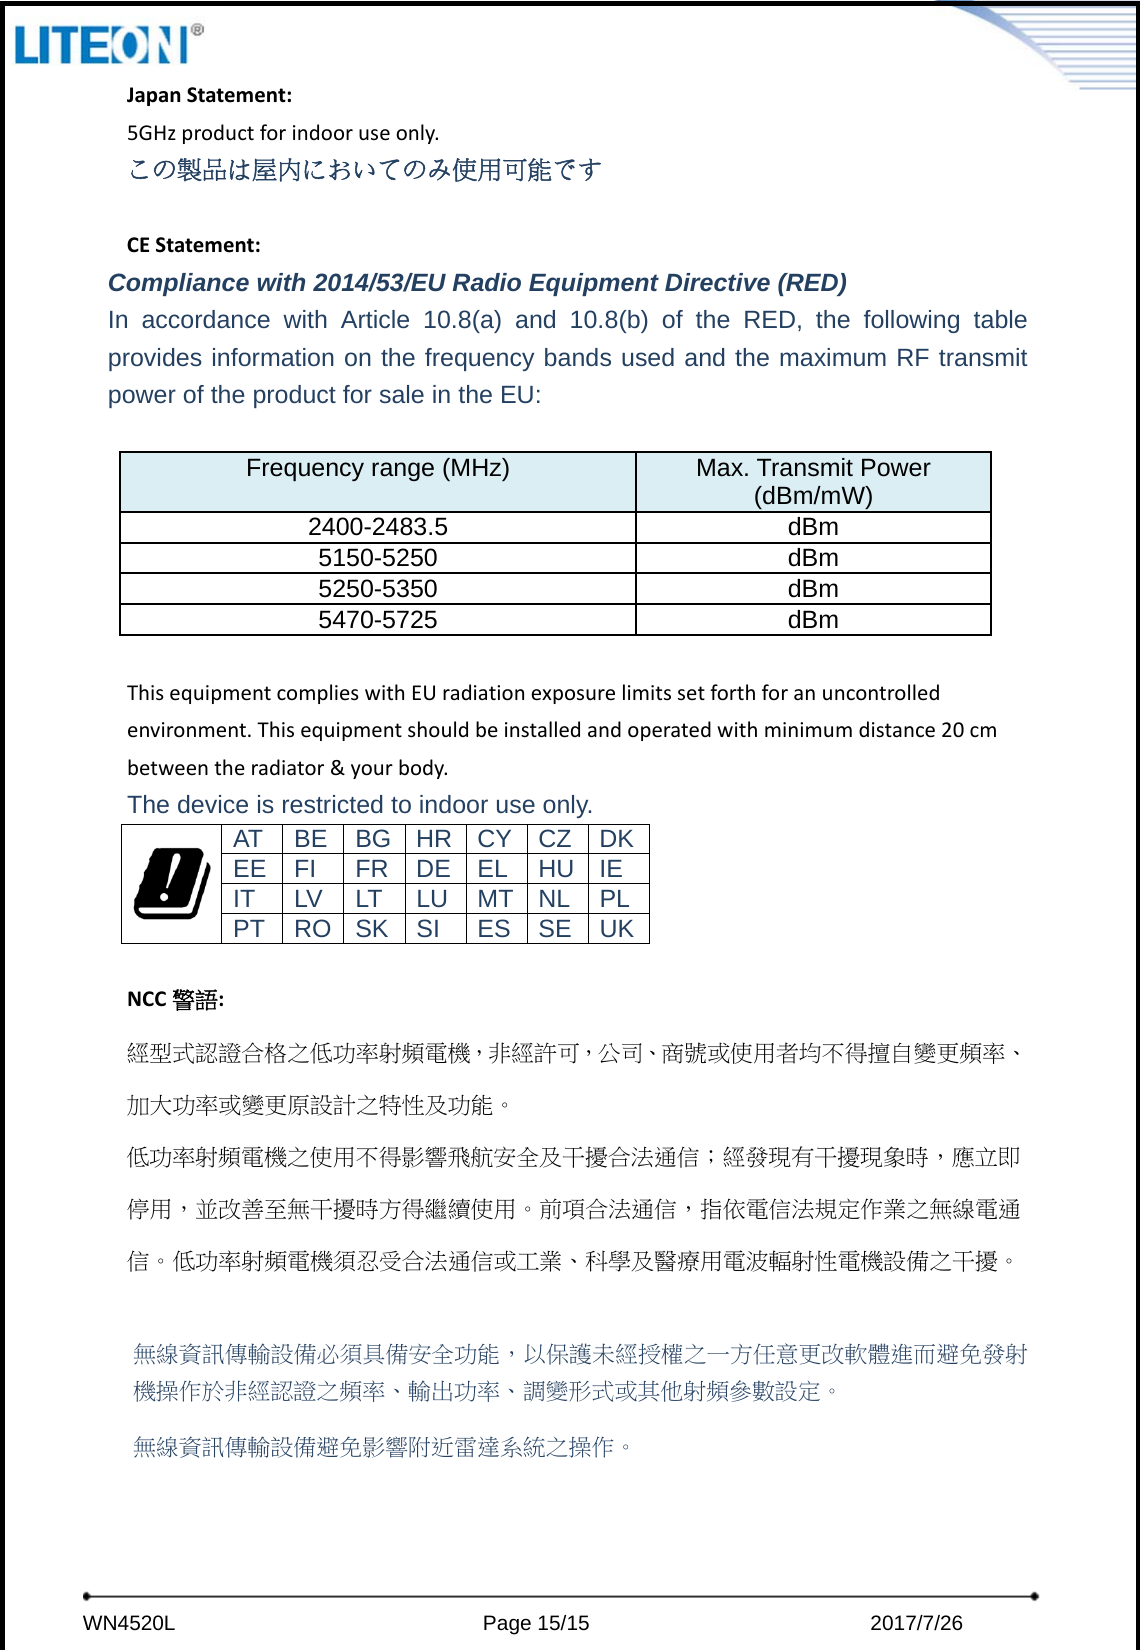     WN4520L                             Page 15/15                          2017/7/26  JapanStatement:5GHzproductforindooruseonly.この製品は屋内においてのみ使用可能ですCEStatement:Compliance with 2014/53/EU Radio Equipment Directive (RED) In accordance with Article 10.8(a) and 10.8(b) of the RED, the following table provides information on the frequency bands used and the maximum RF transmit power of the product for sale in the EU: Frequency range (MHz)  Max. Transmit Power (dBm/mW) 2400-2483.5 dBm 5150-5250 dBm 5250-5350 dBm 5470-5725 dBm ThisequipmentcomplieswithEUradiationexposurelimitssetforthforanuncontrolledenvironment.Thisequipmentshouldbeinstalledandoperatedwithminimumdistance20cmbetweentheradiator&amp;yourbody.The device is restricted to indoor use only.  AT BE BG HR CY CZ DK EE FI  FR DE EL HU IE IT  LV LT  LU MT NL PL PT RO SK SI  ES SE UK NCC 警語:經型式認證合格之低功率射頻電機，非經許可，公司、商號或使用者均不得擅自變更頻率、加大功率或變更原設計之特性及功能。低功率射頻電機之使用不得影響飛航安全及干擾合法通信；經發現有干擾現象時，應立即停用，並改善至無干擾時方得繼續使用。前項合法通信，指依電信法規定作業之無線電通信。低功率射頻電機須忍受合法通信或工業、科學及醫療用電波輻射性電機設備之干擾。無線資訊傳輸設備必須具備安全功能，以保護未經授權之一方任意更改軟體進而避免發射機操作於非經認證之頻率、輸出功率、調變形式或其他射頻參數設定。 無線資訊傳輸設備避免影響附近雷達系統之操作。